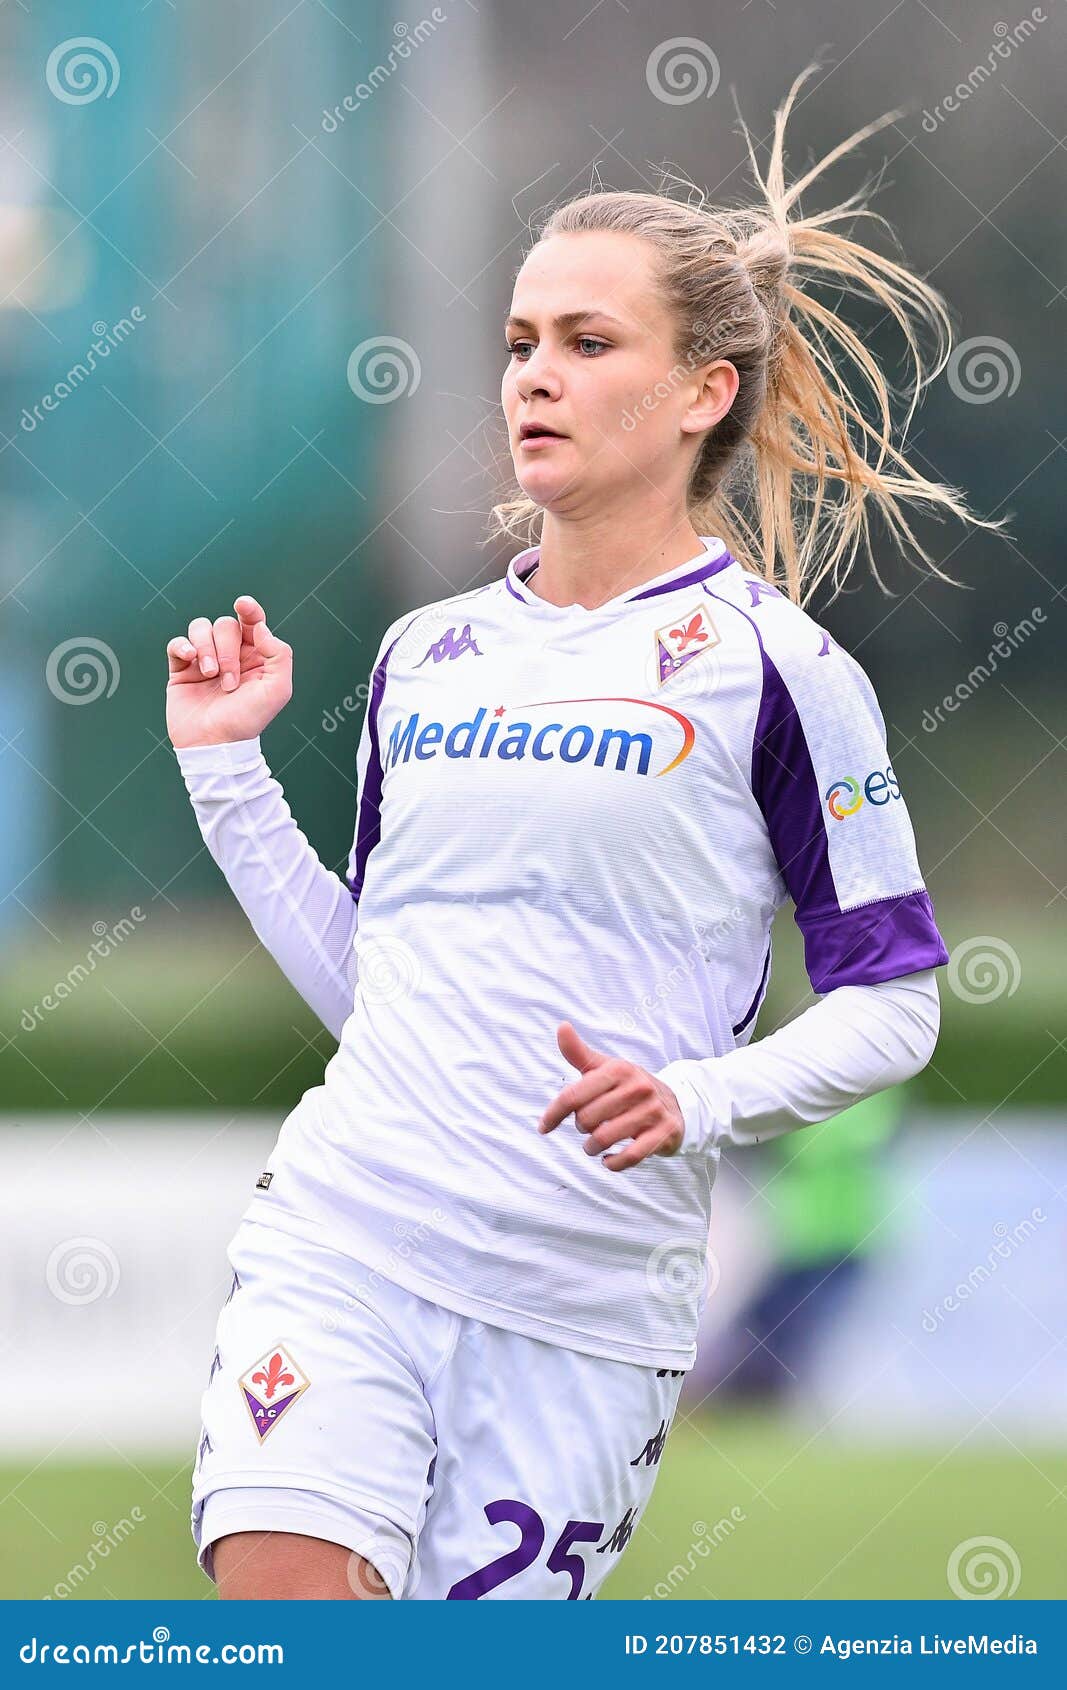 Academia Acf Fiorentina Femminile Vs San Marino Fotografia Editorial -  Imagem de campo, campeonato: 207851432